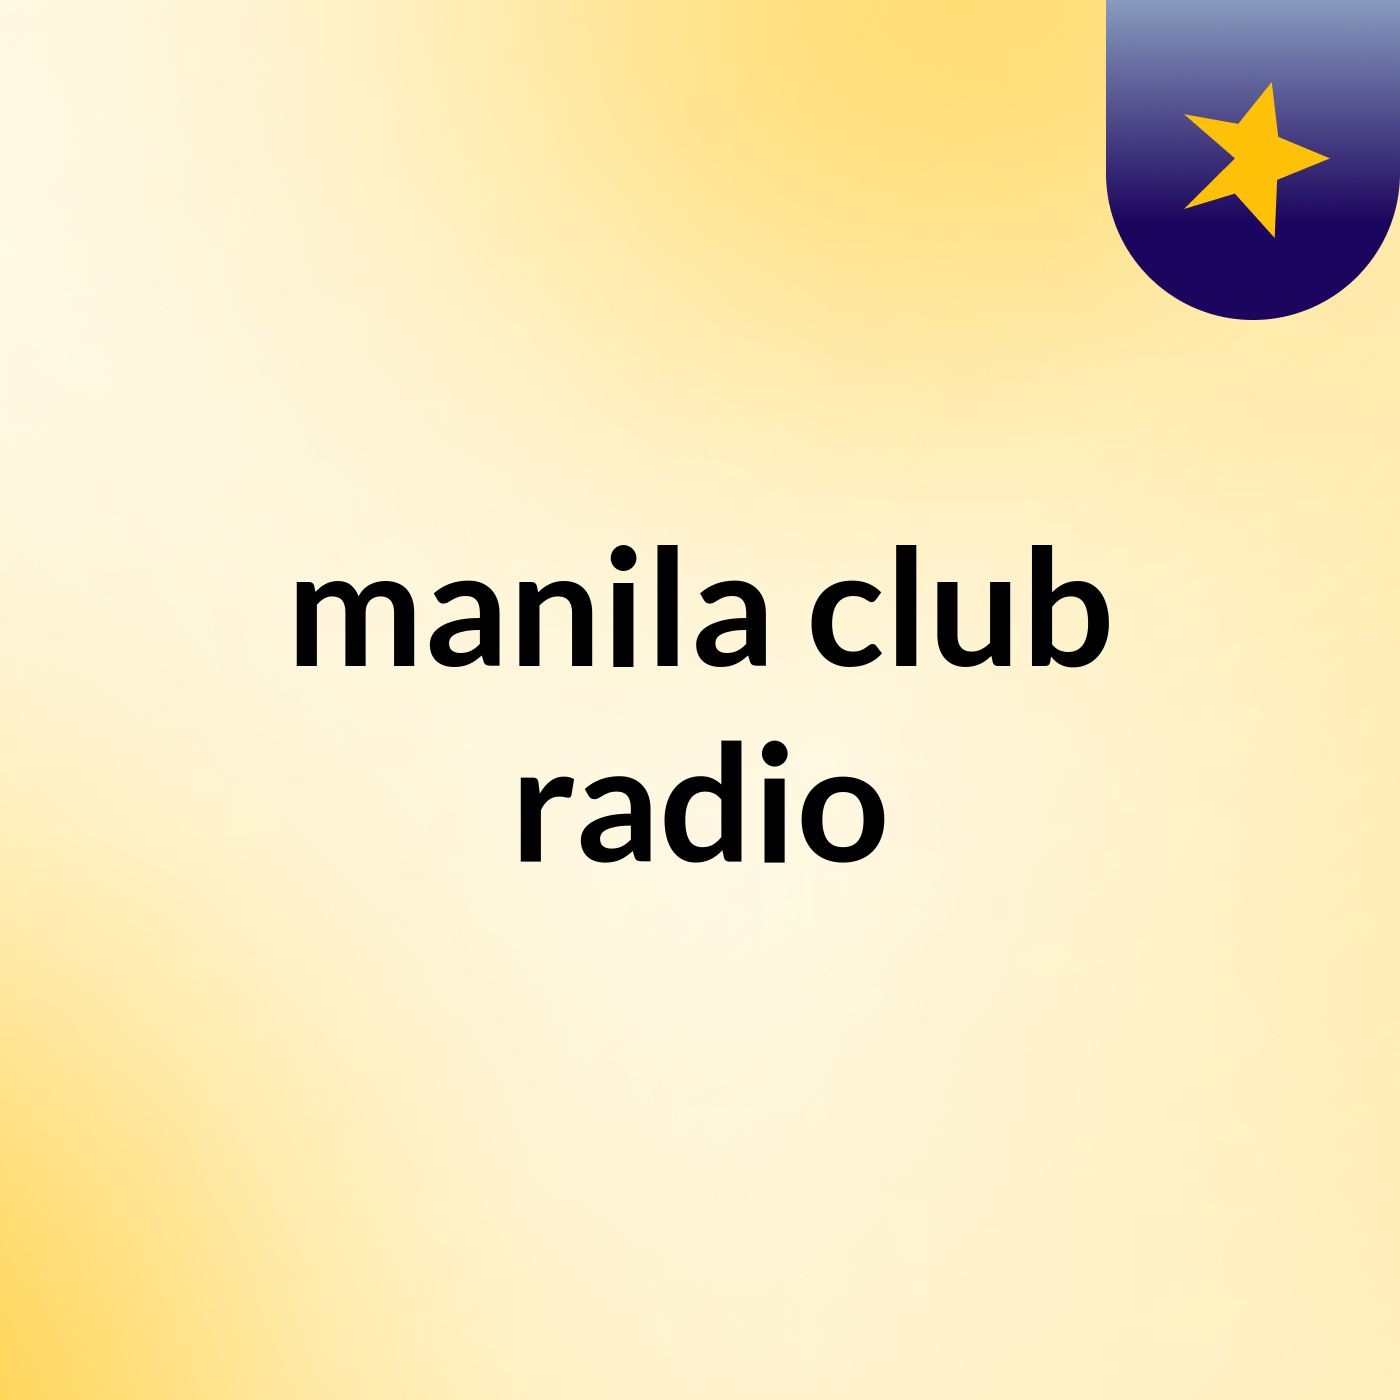 manila club radio